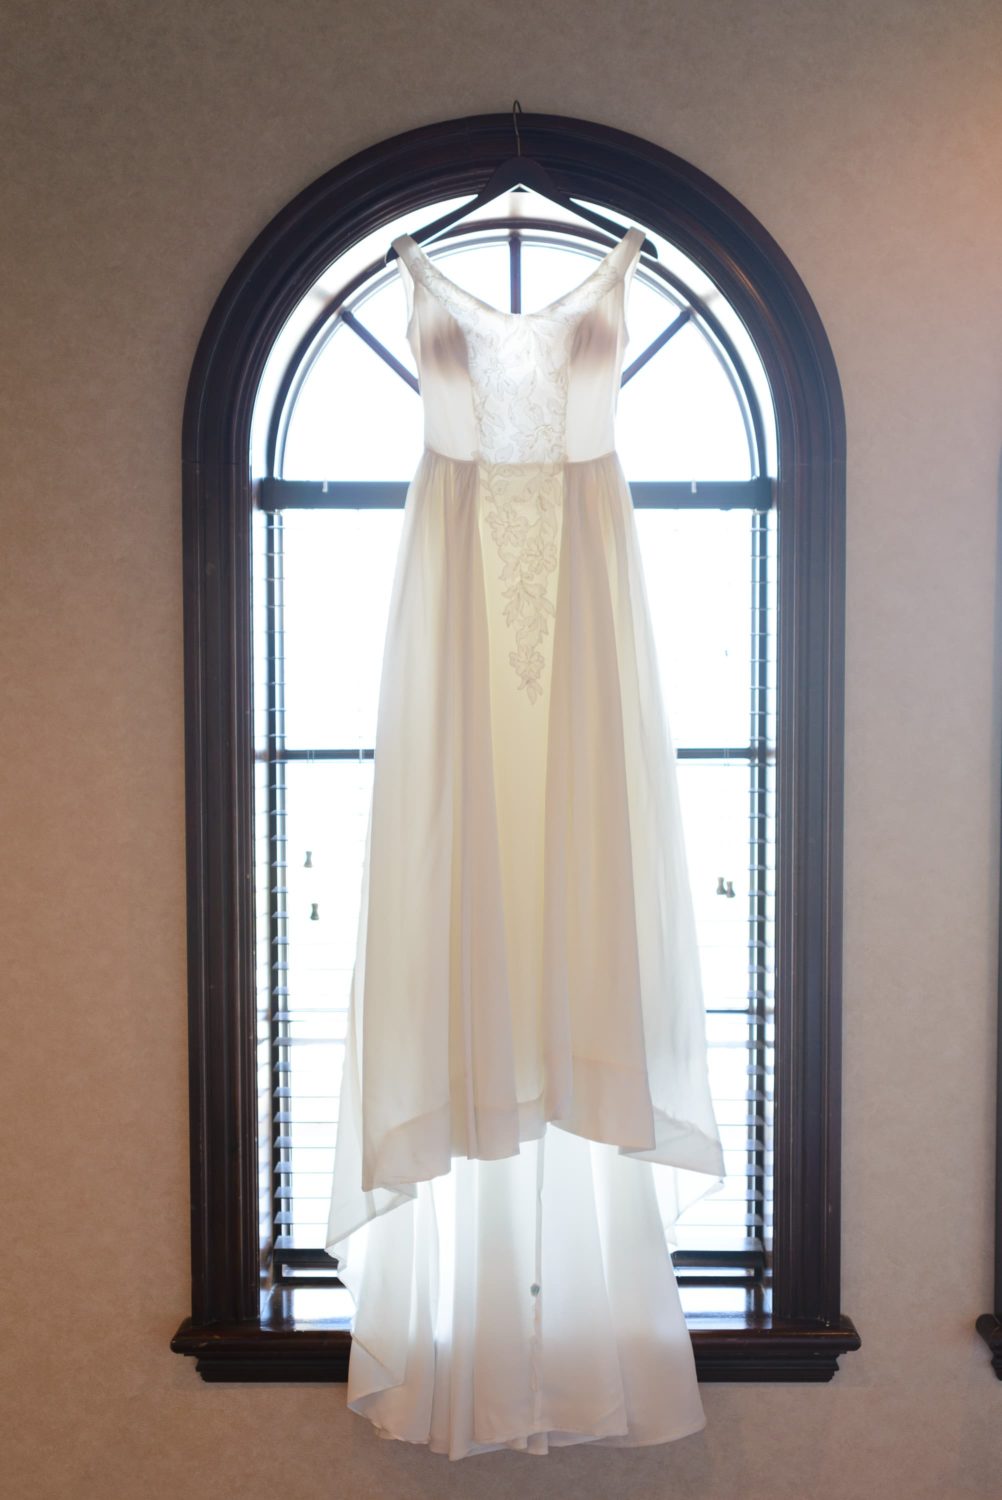 Bride's classic dress hanging in a window -  Grande Dunes Ocean Club